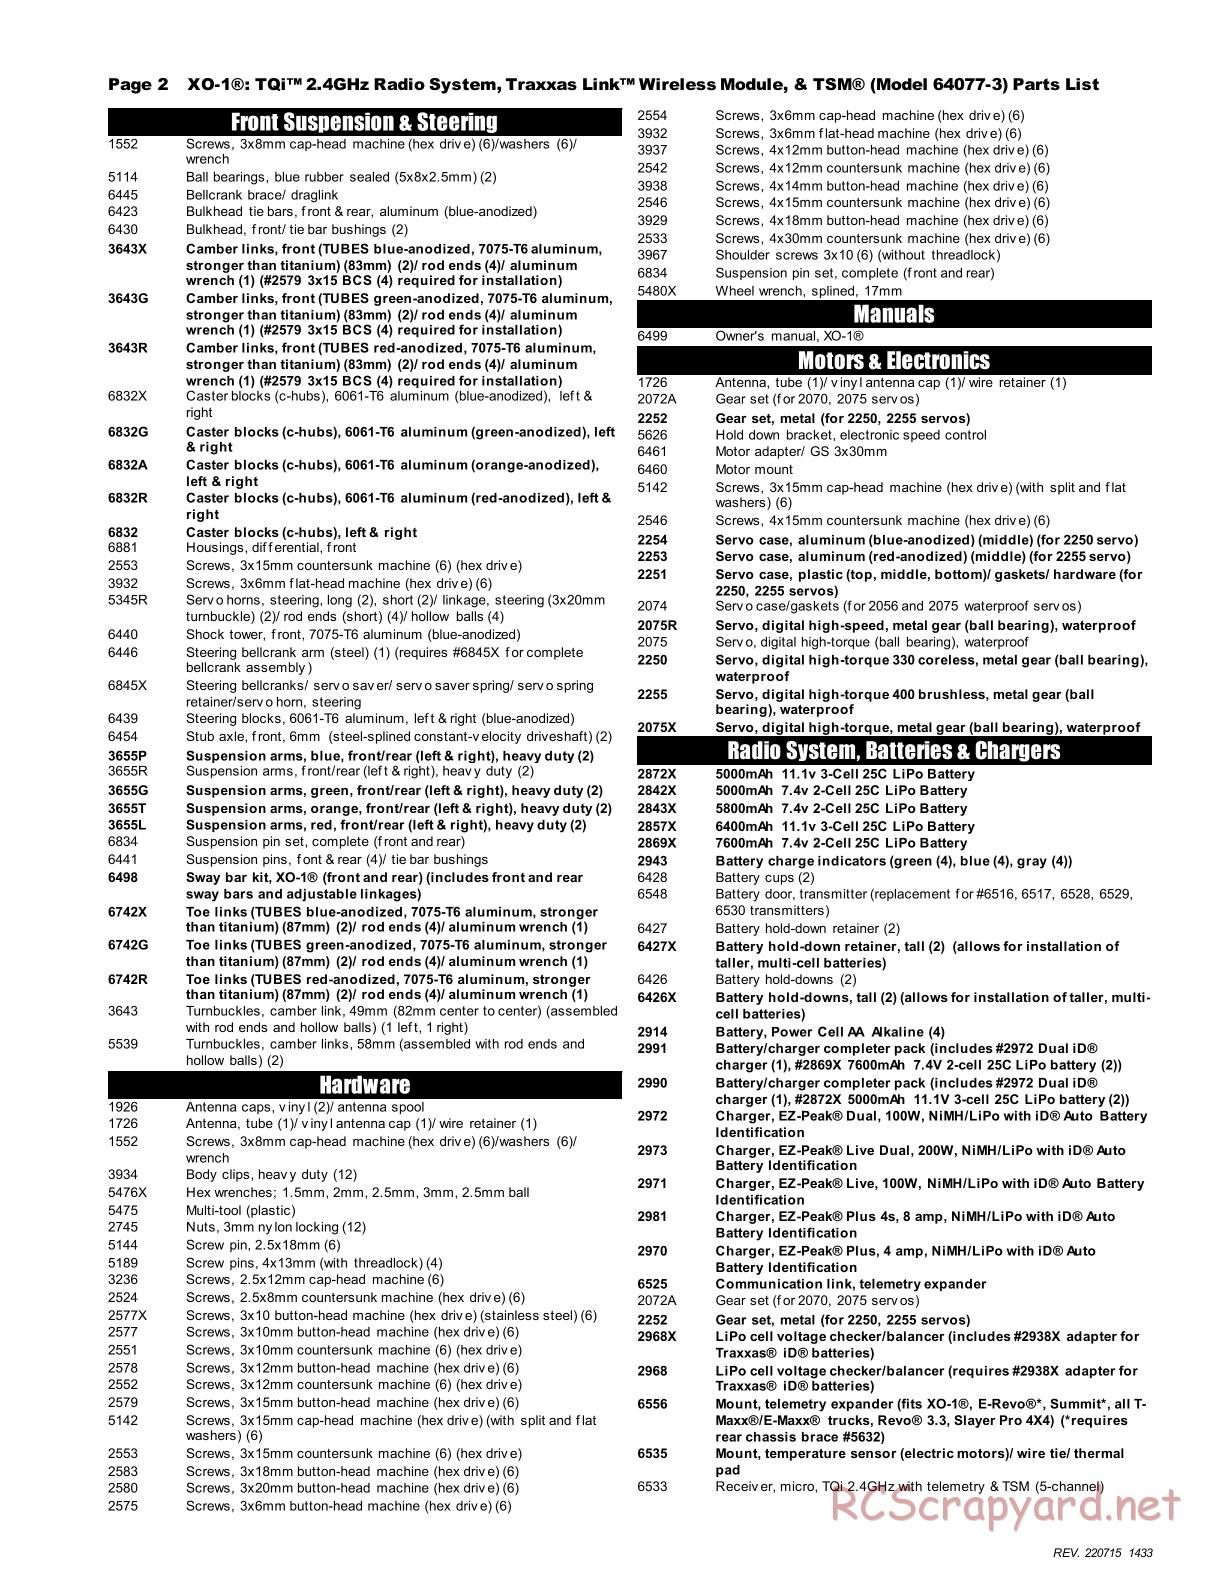 Traxxas - XO-1 TSM - Parts List - Page 2